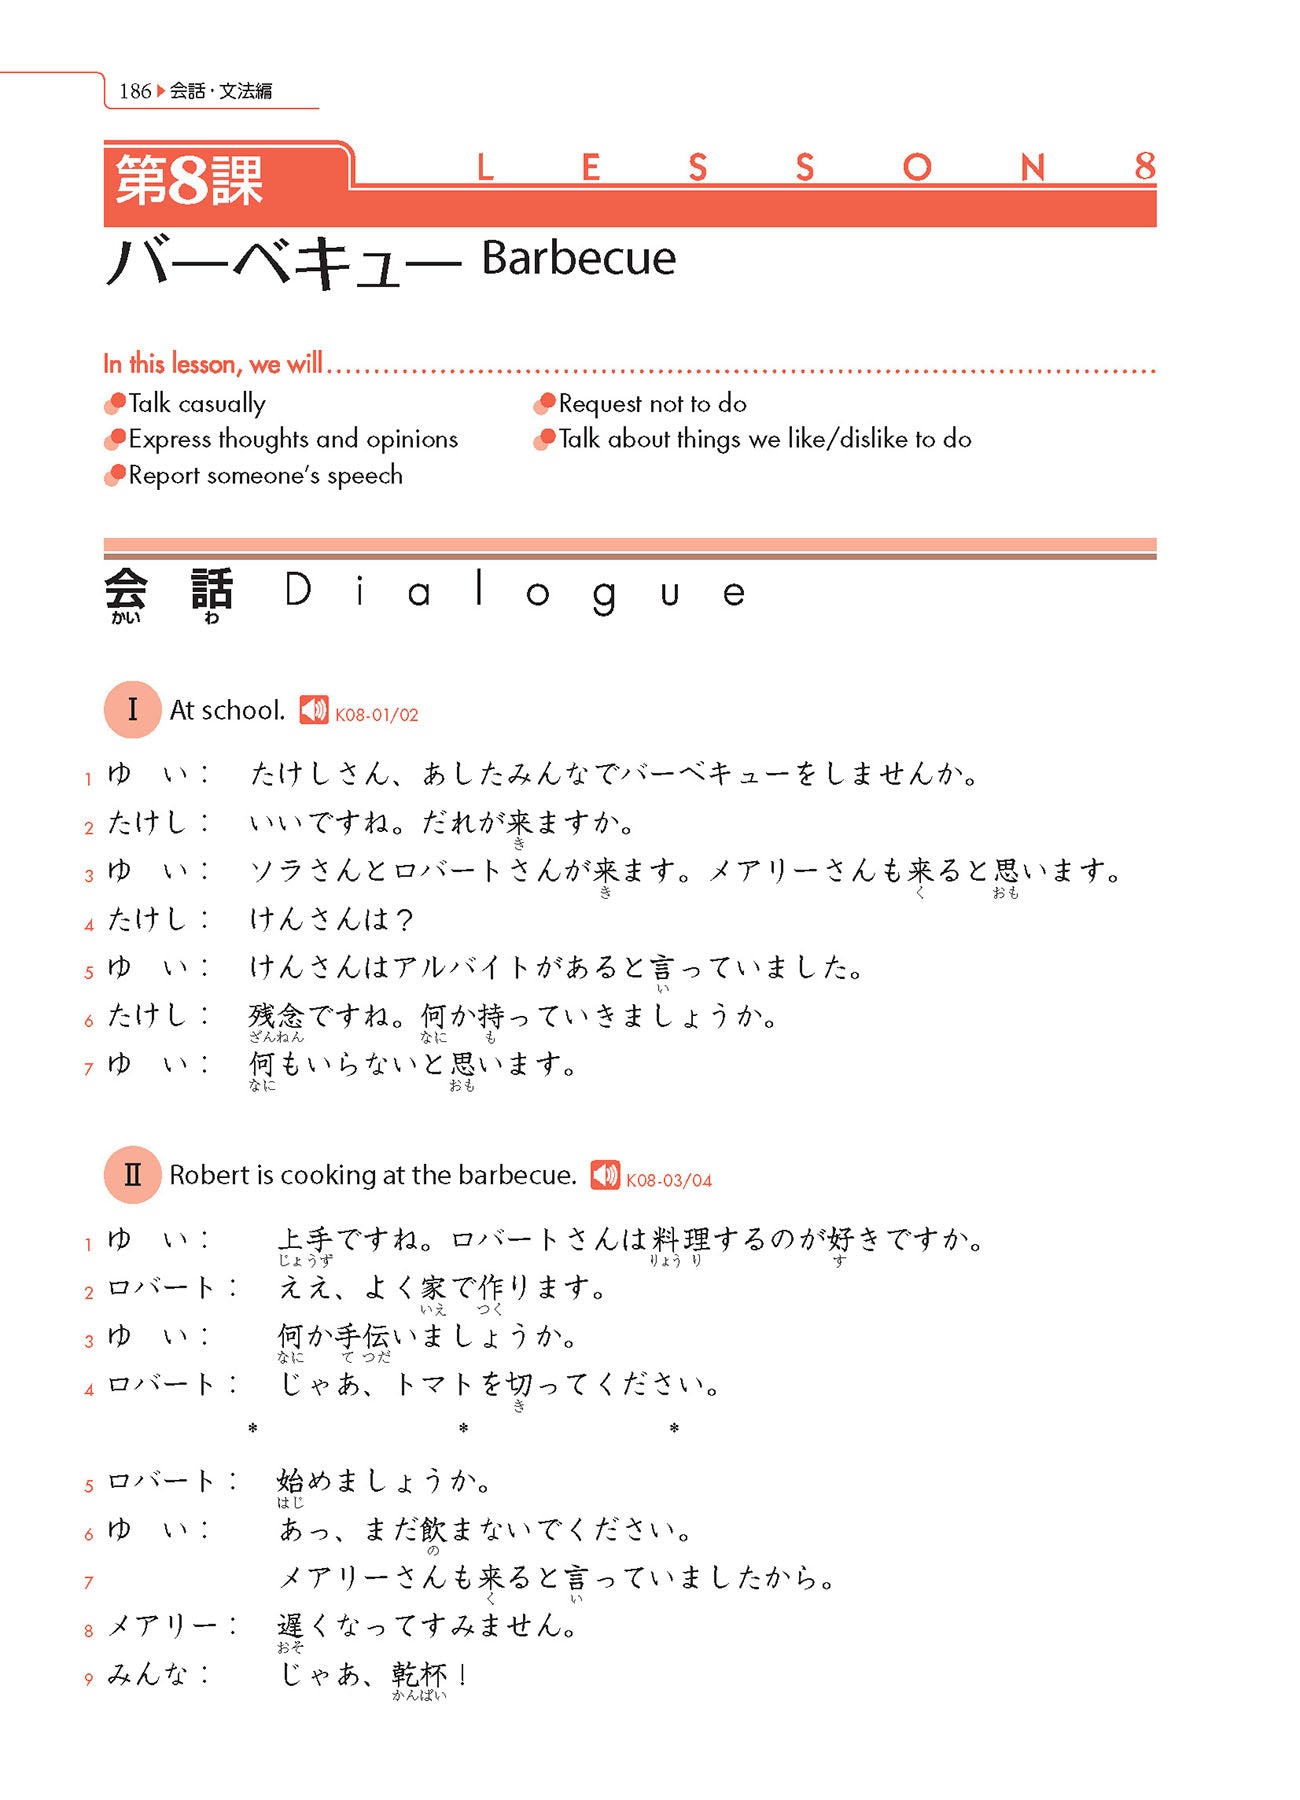 Genki Textbook 2 - Sample Page 1